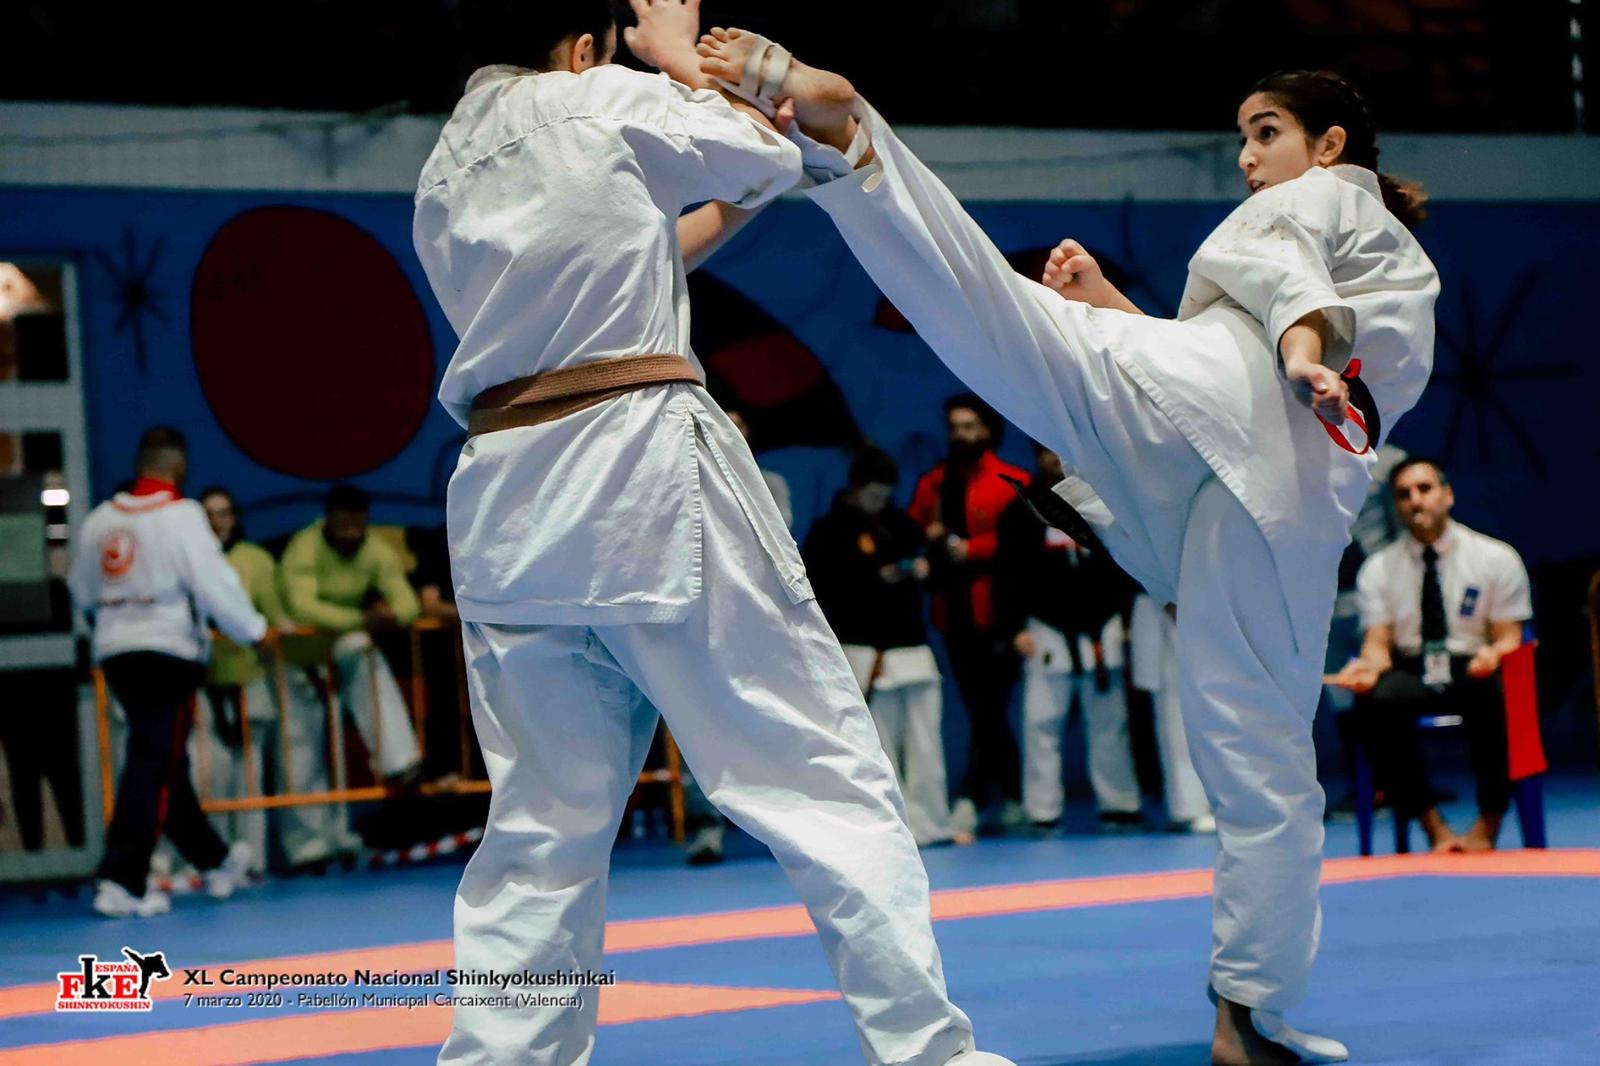 Andrea Alcaraz, Subcampeona de España de kárate kyokushinkai :“Tardaré meses en recuperar el nivel de competición”